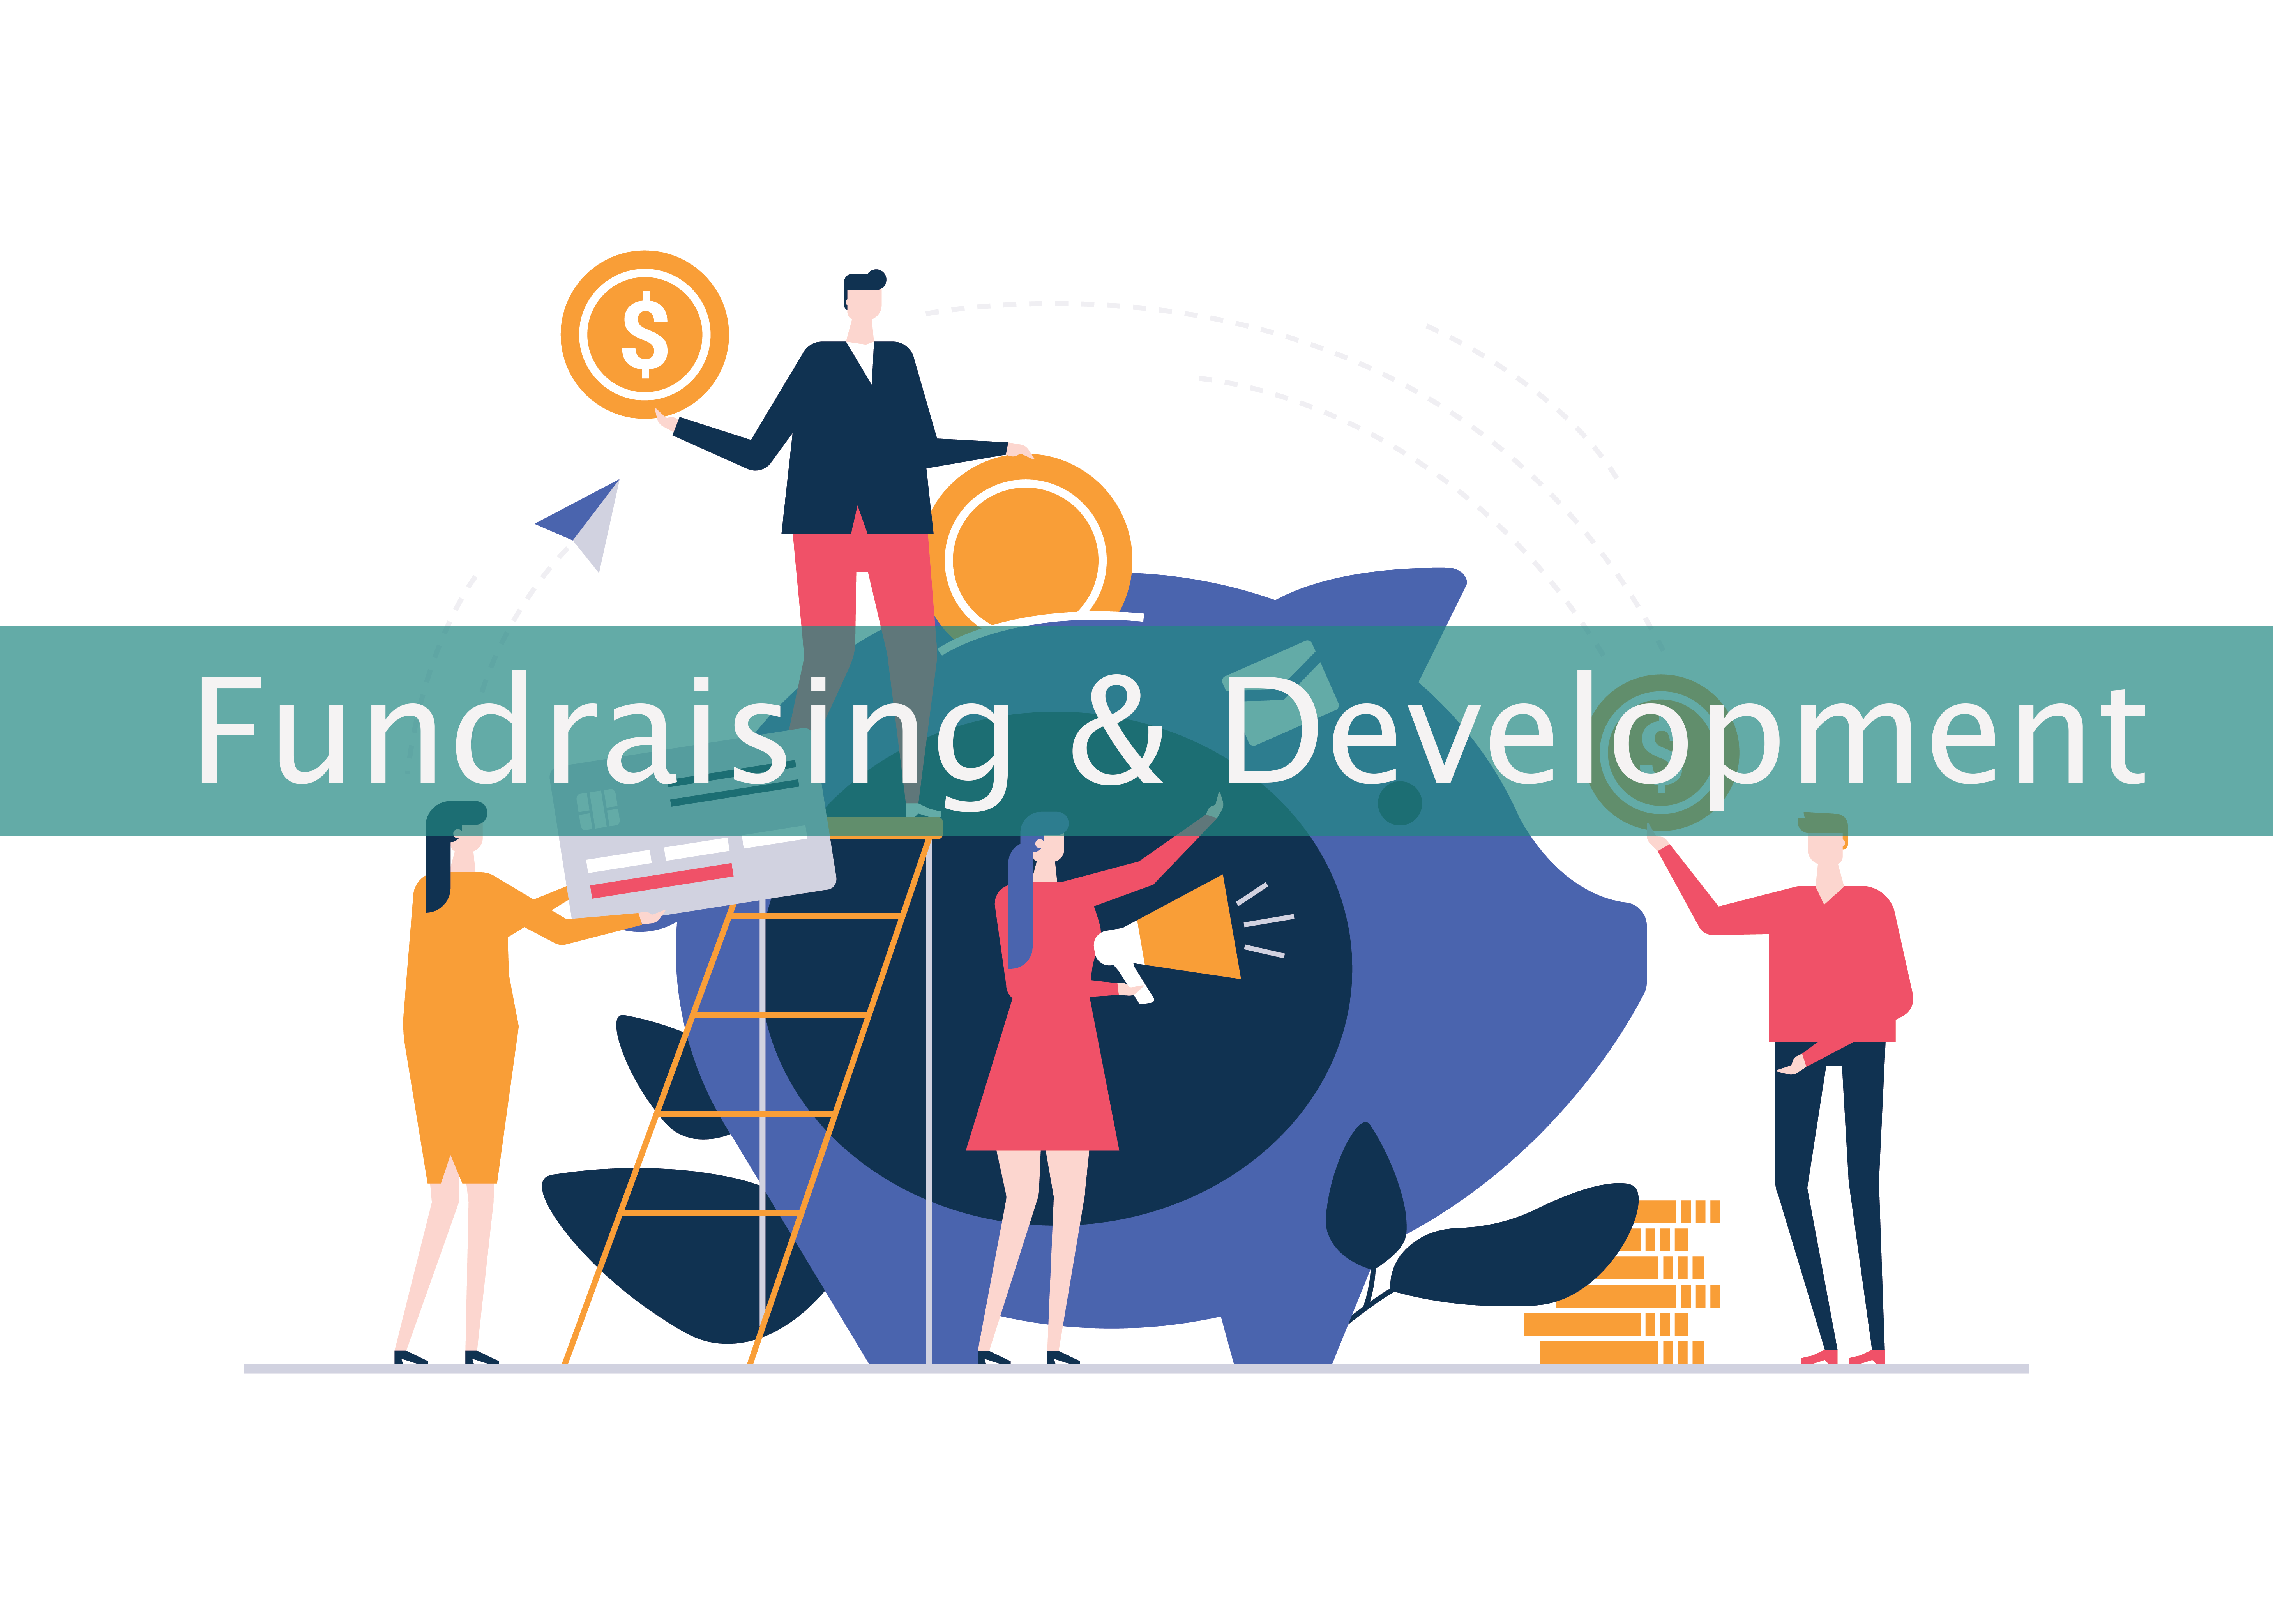 Fundraising & Development